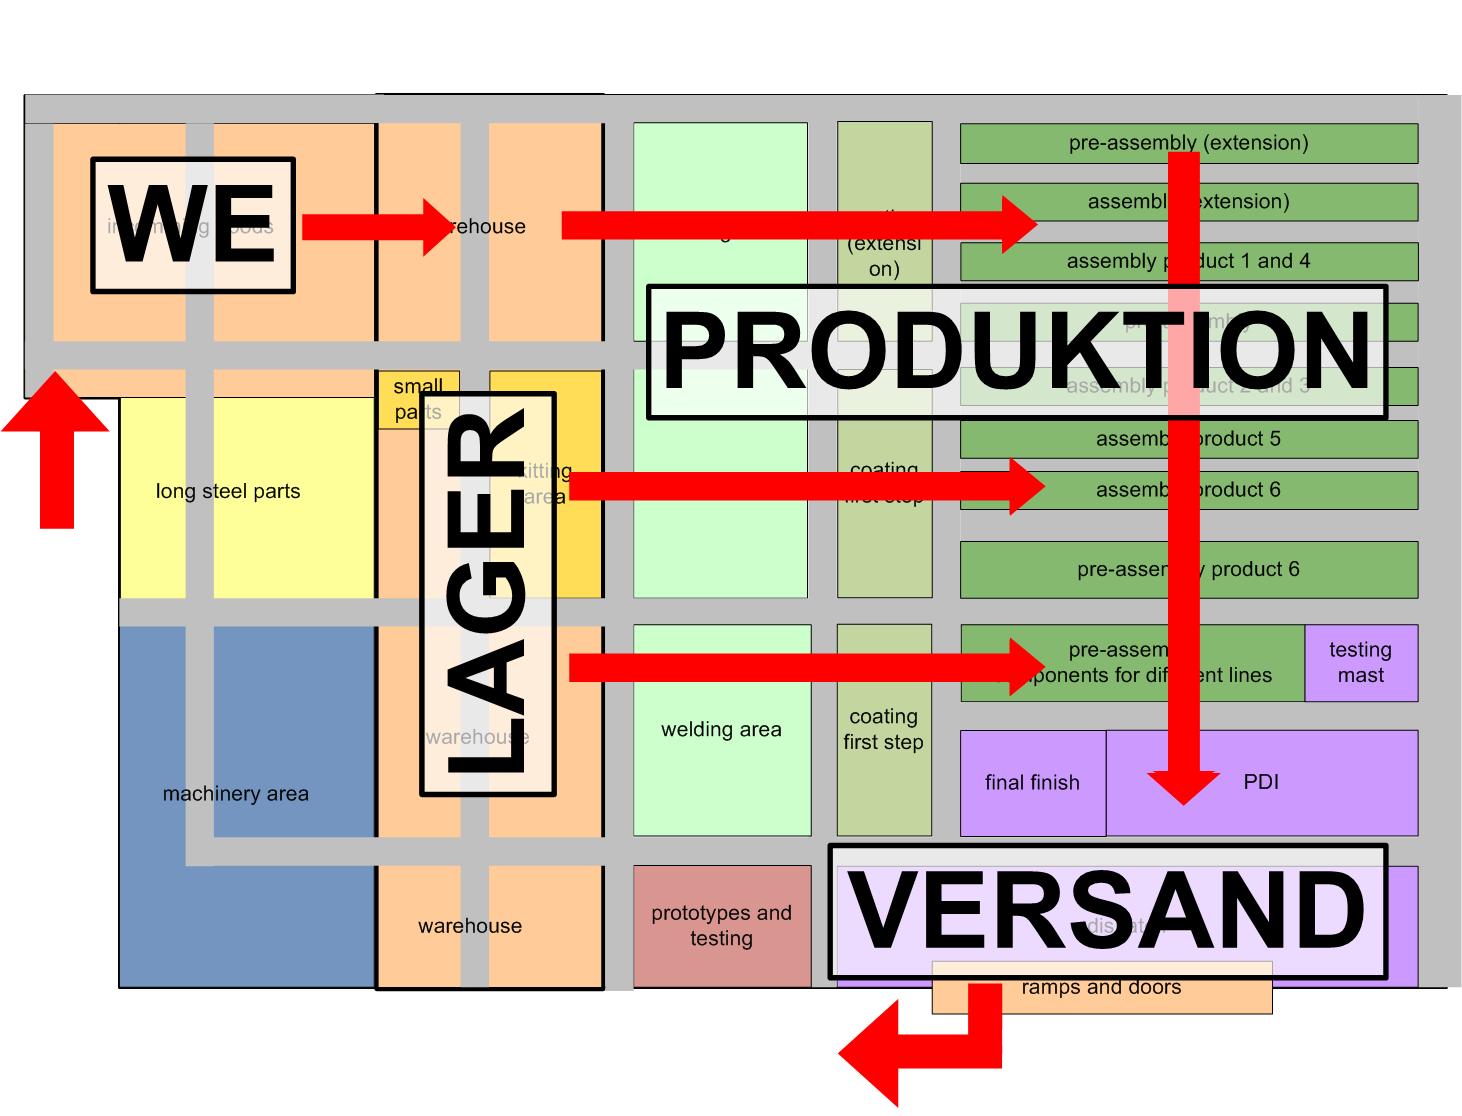 Fabrikplanung und Organisationsstruktur